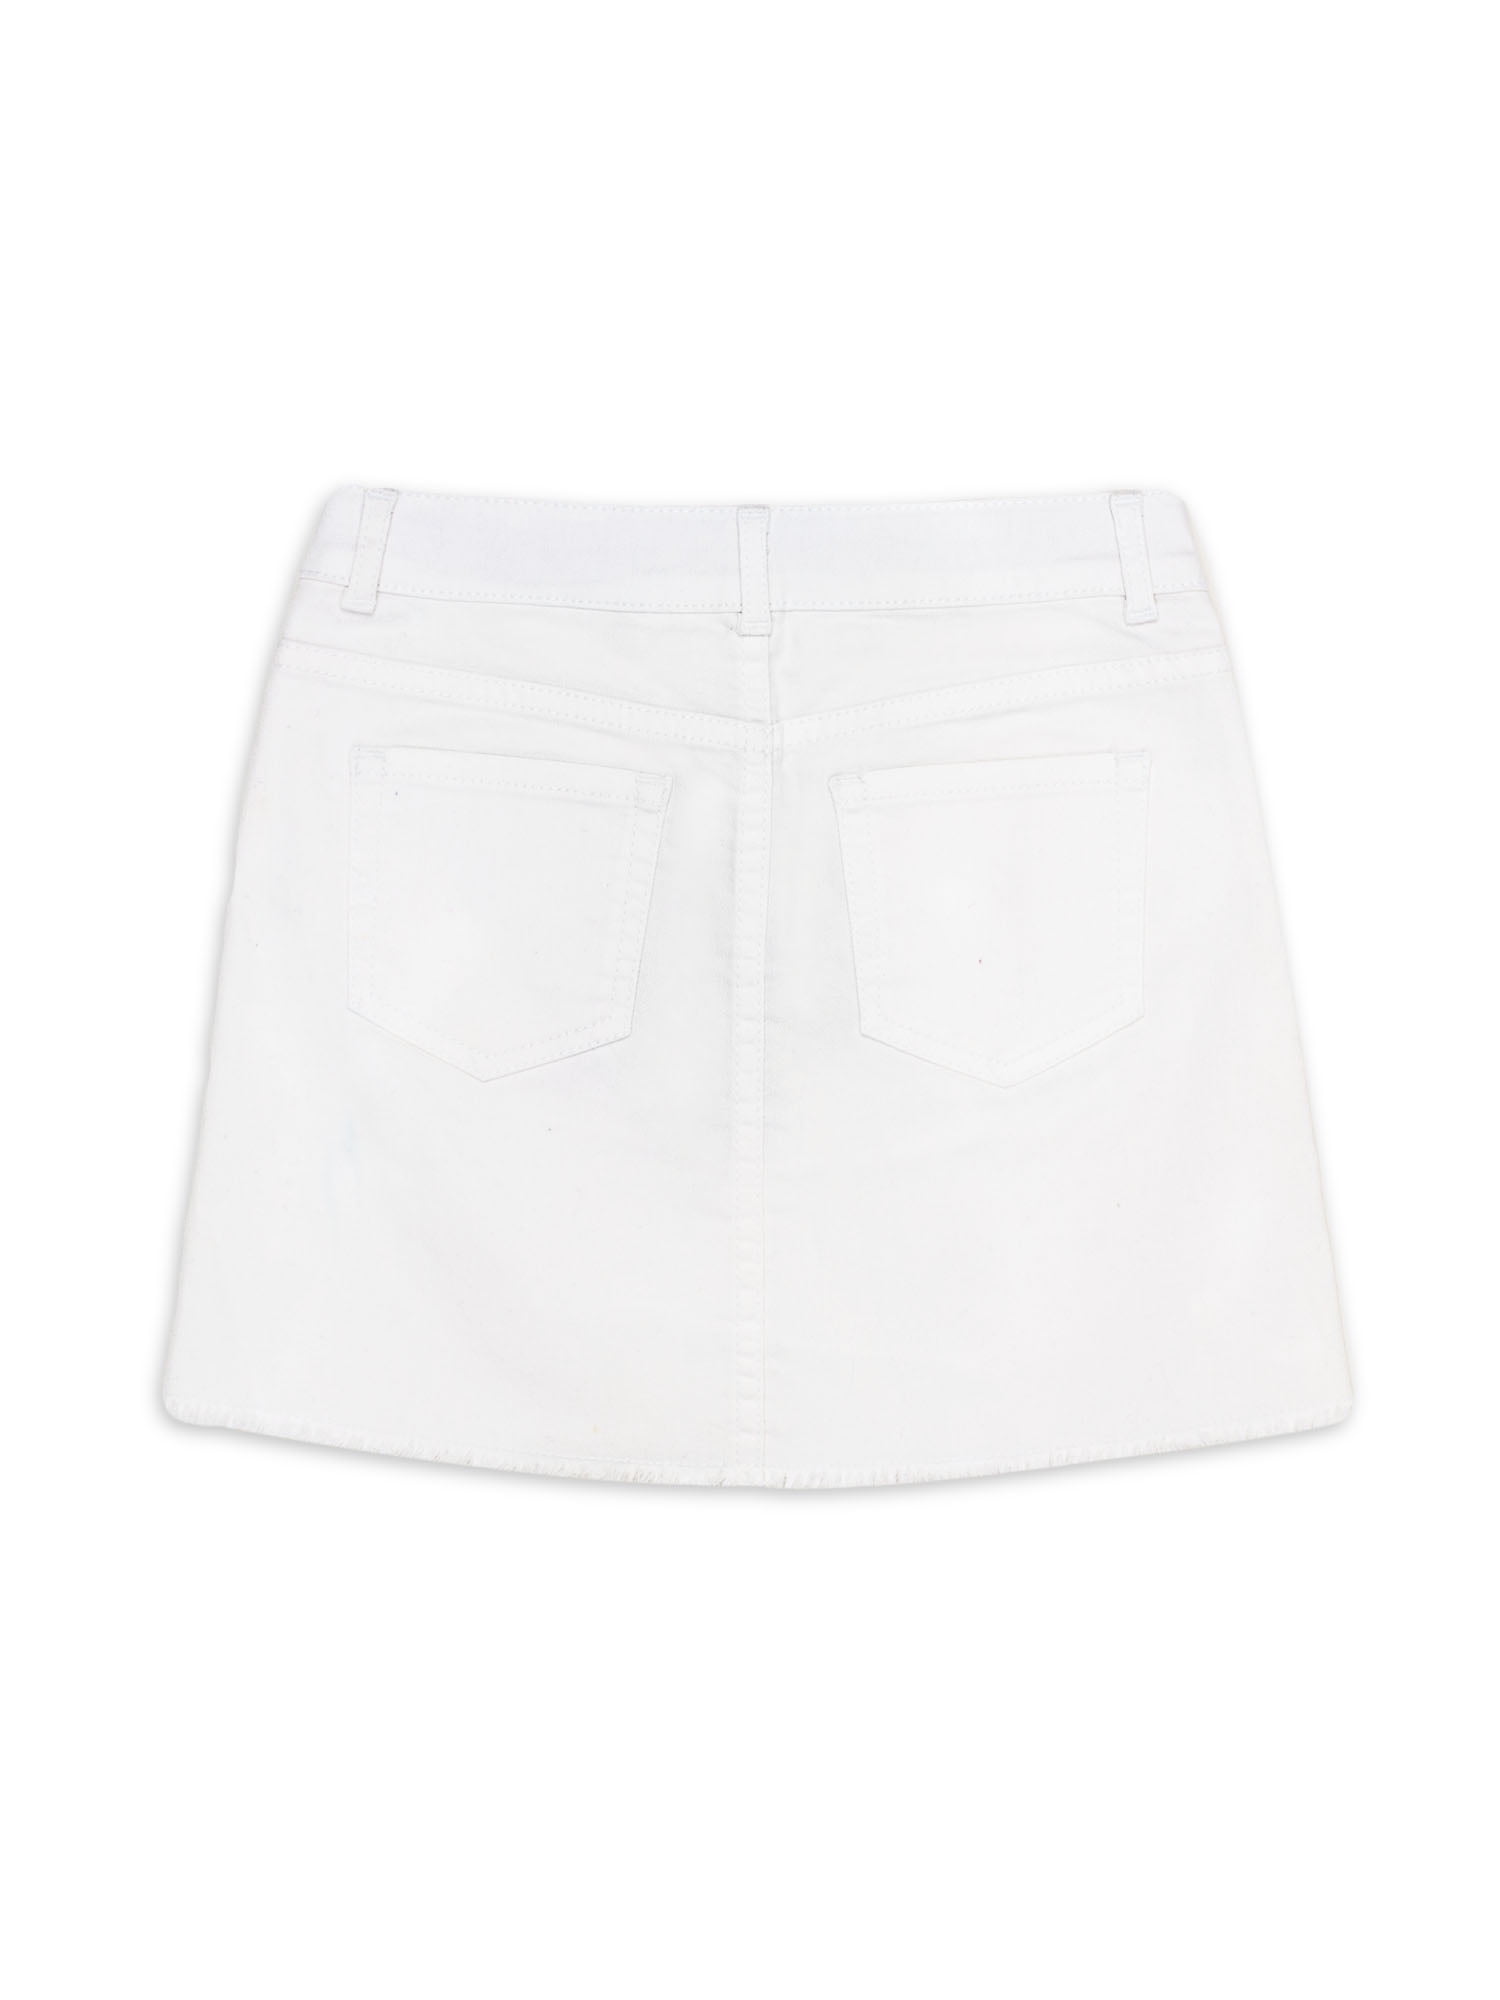 Girls White Contrast Thread Twill Skirt at Rs 771.00 | Skirts For Girls,  गर्ल्स स्कर्ट - NOZ2TOZ, New Delhi | ID: 2850654303555